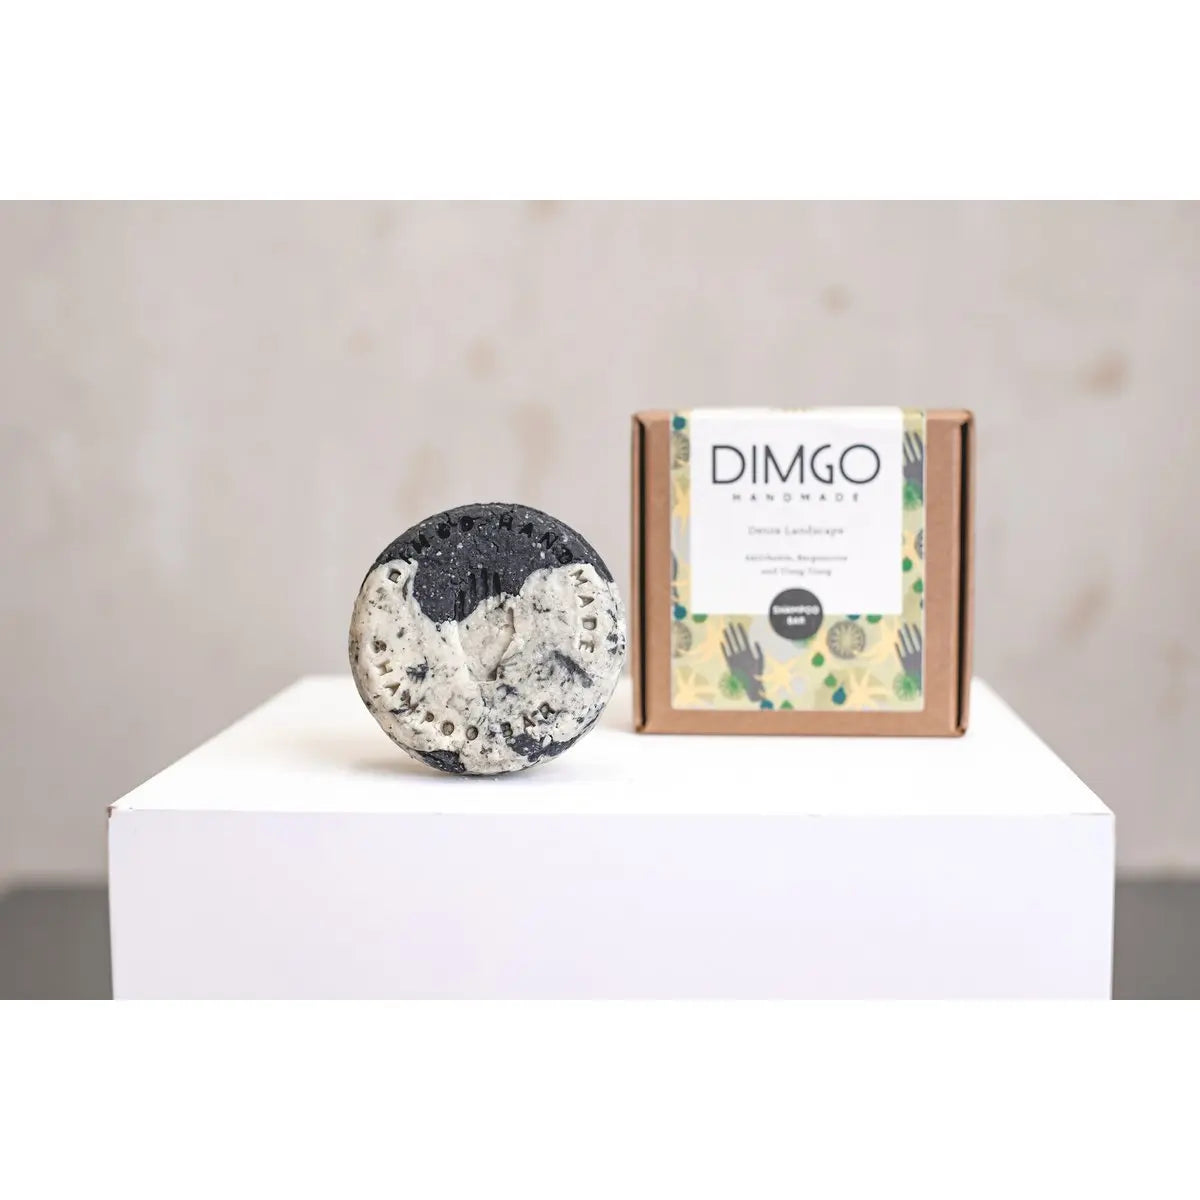 Dimgo handmade shampoobar detox landscape handgemaakteskincare